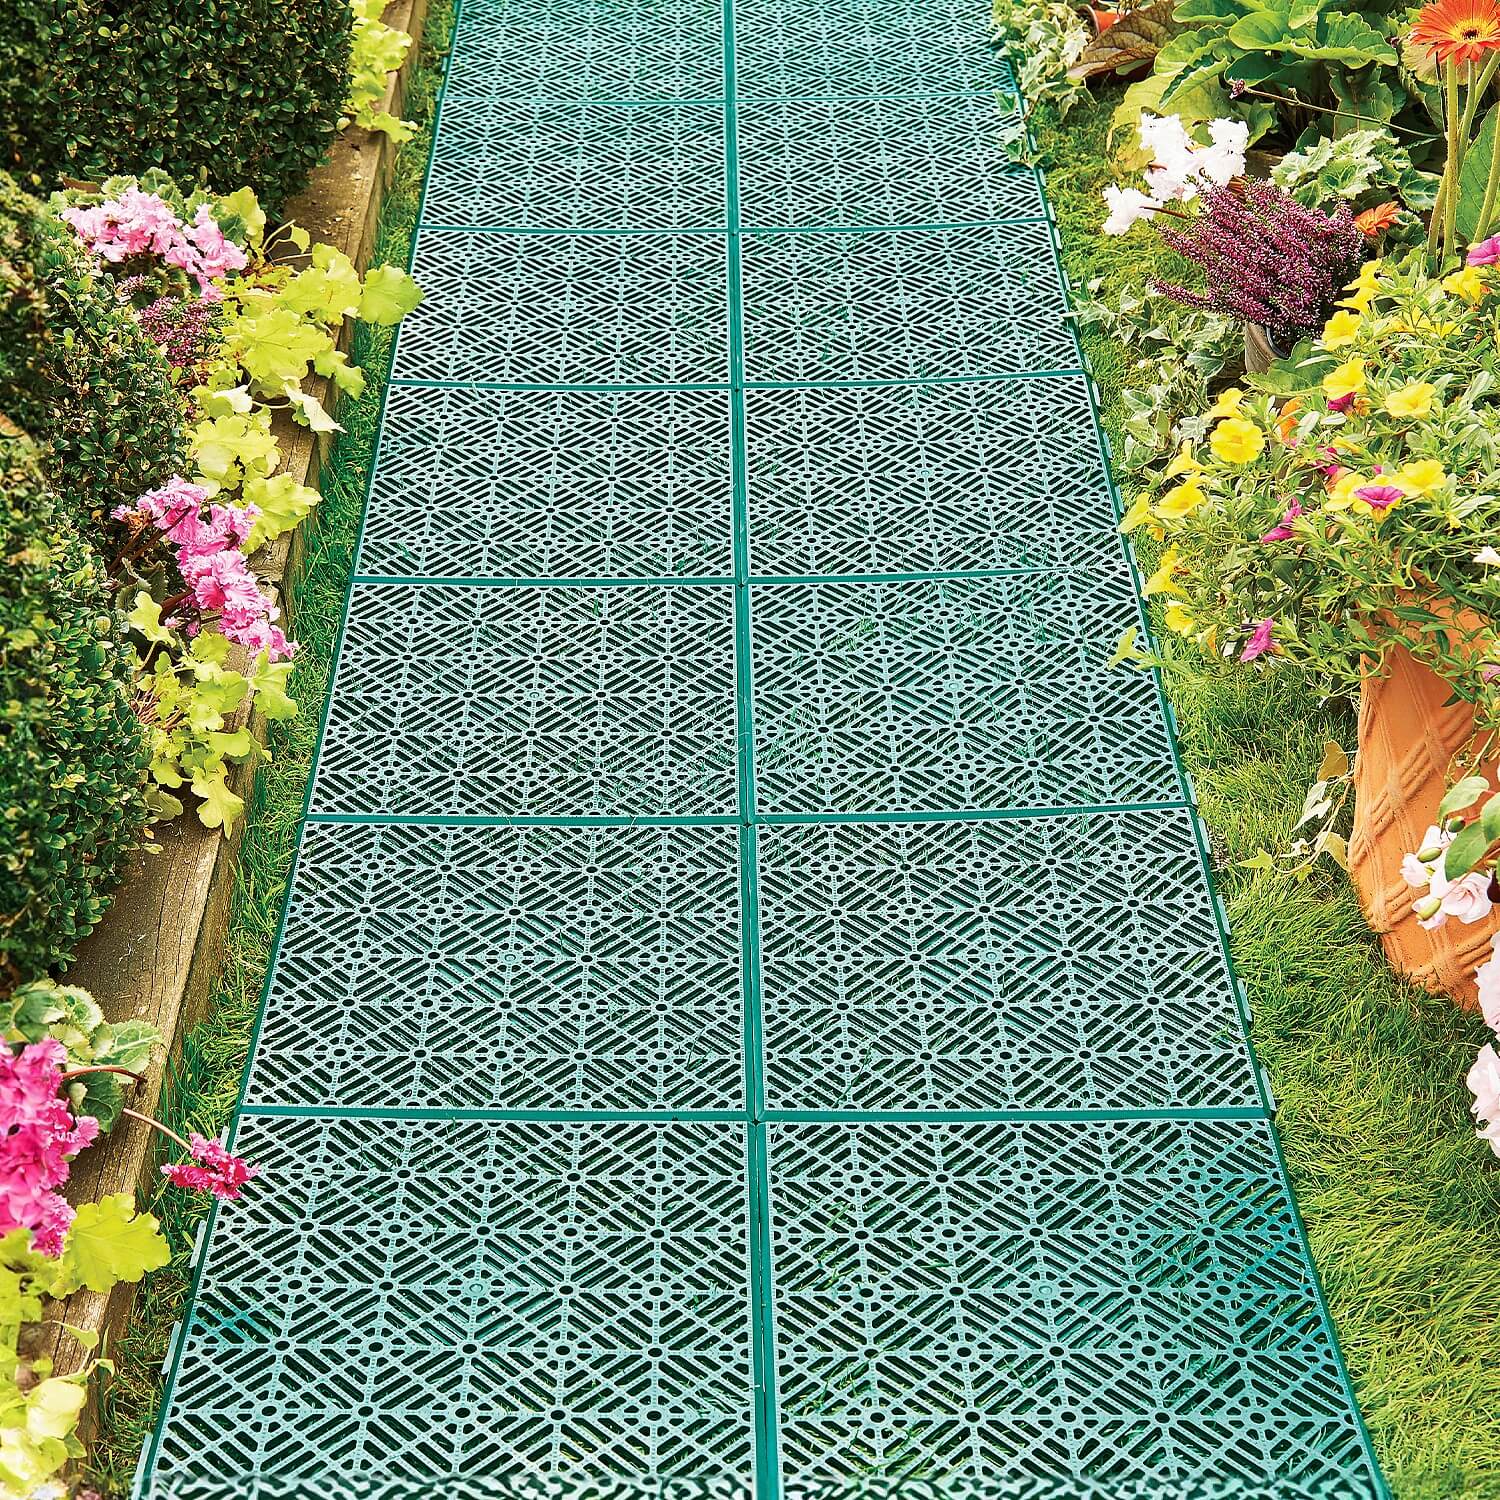 Pack of 5 Modular Garden Tiles - Weatherproof & Non-Slip.